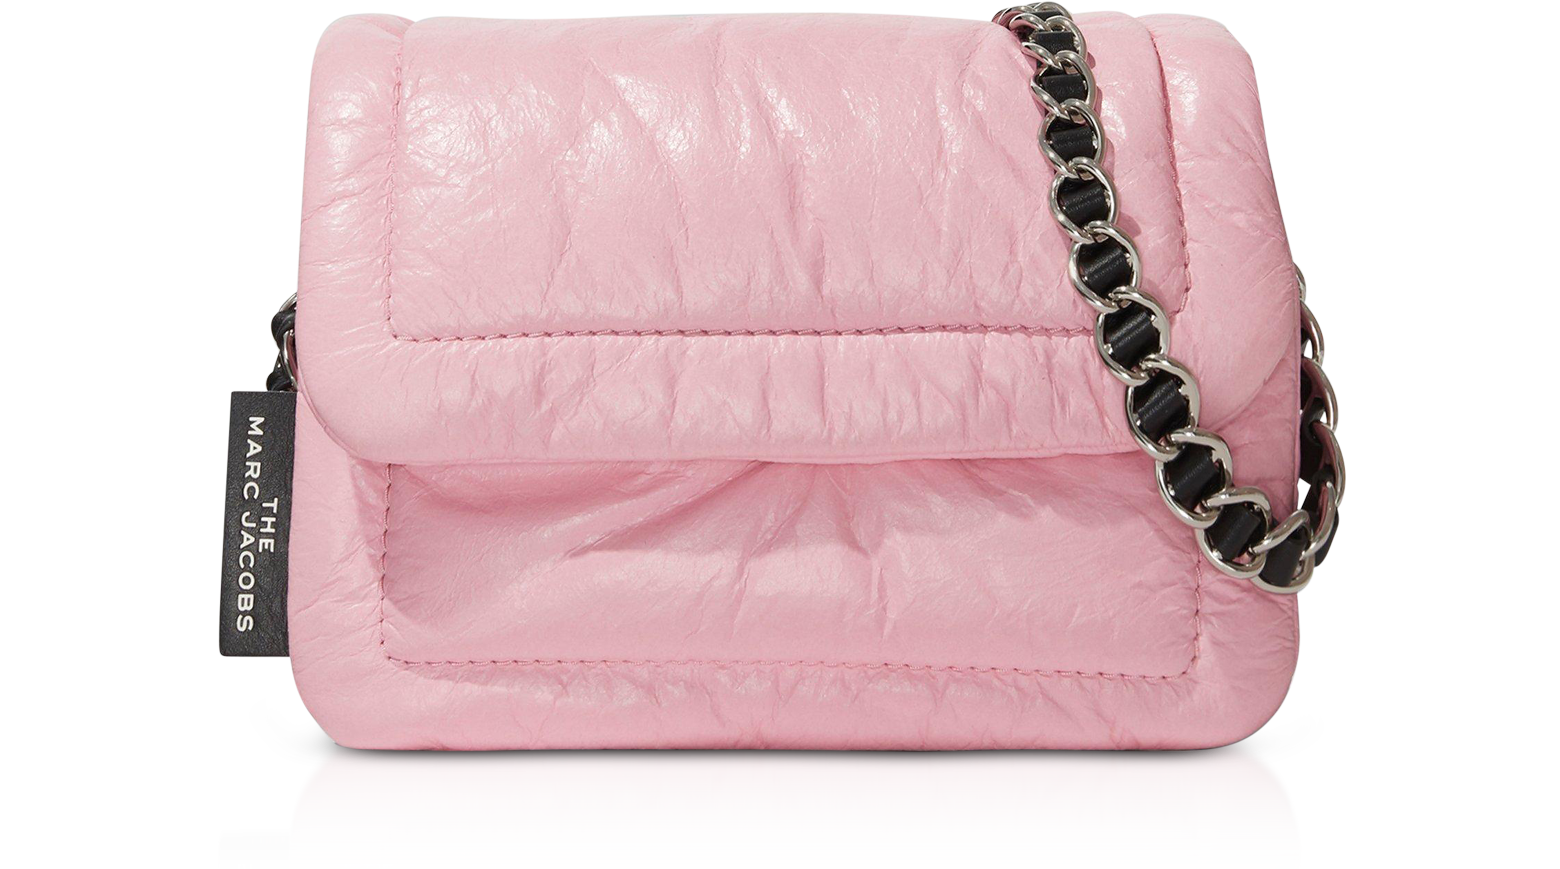 The Mini Pillow Powder Pink Leather Crossbody Bag